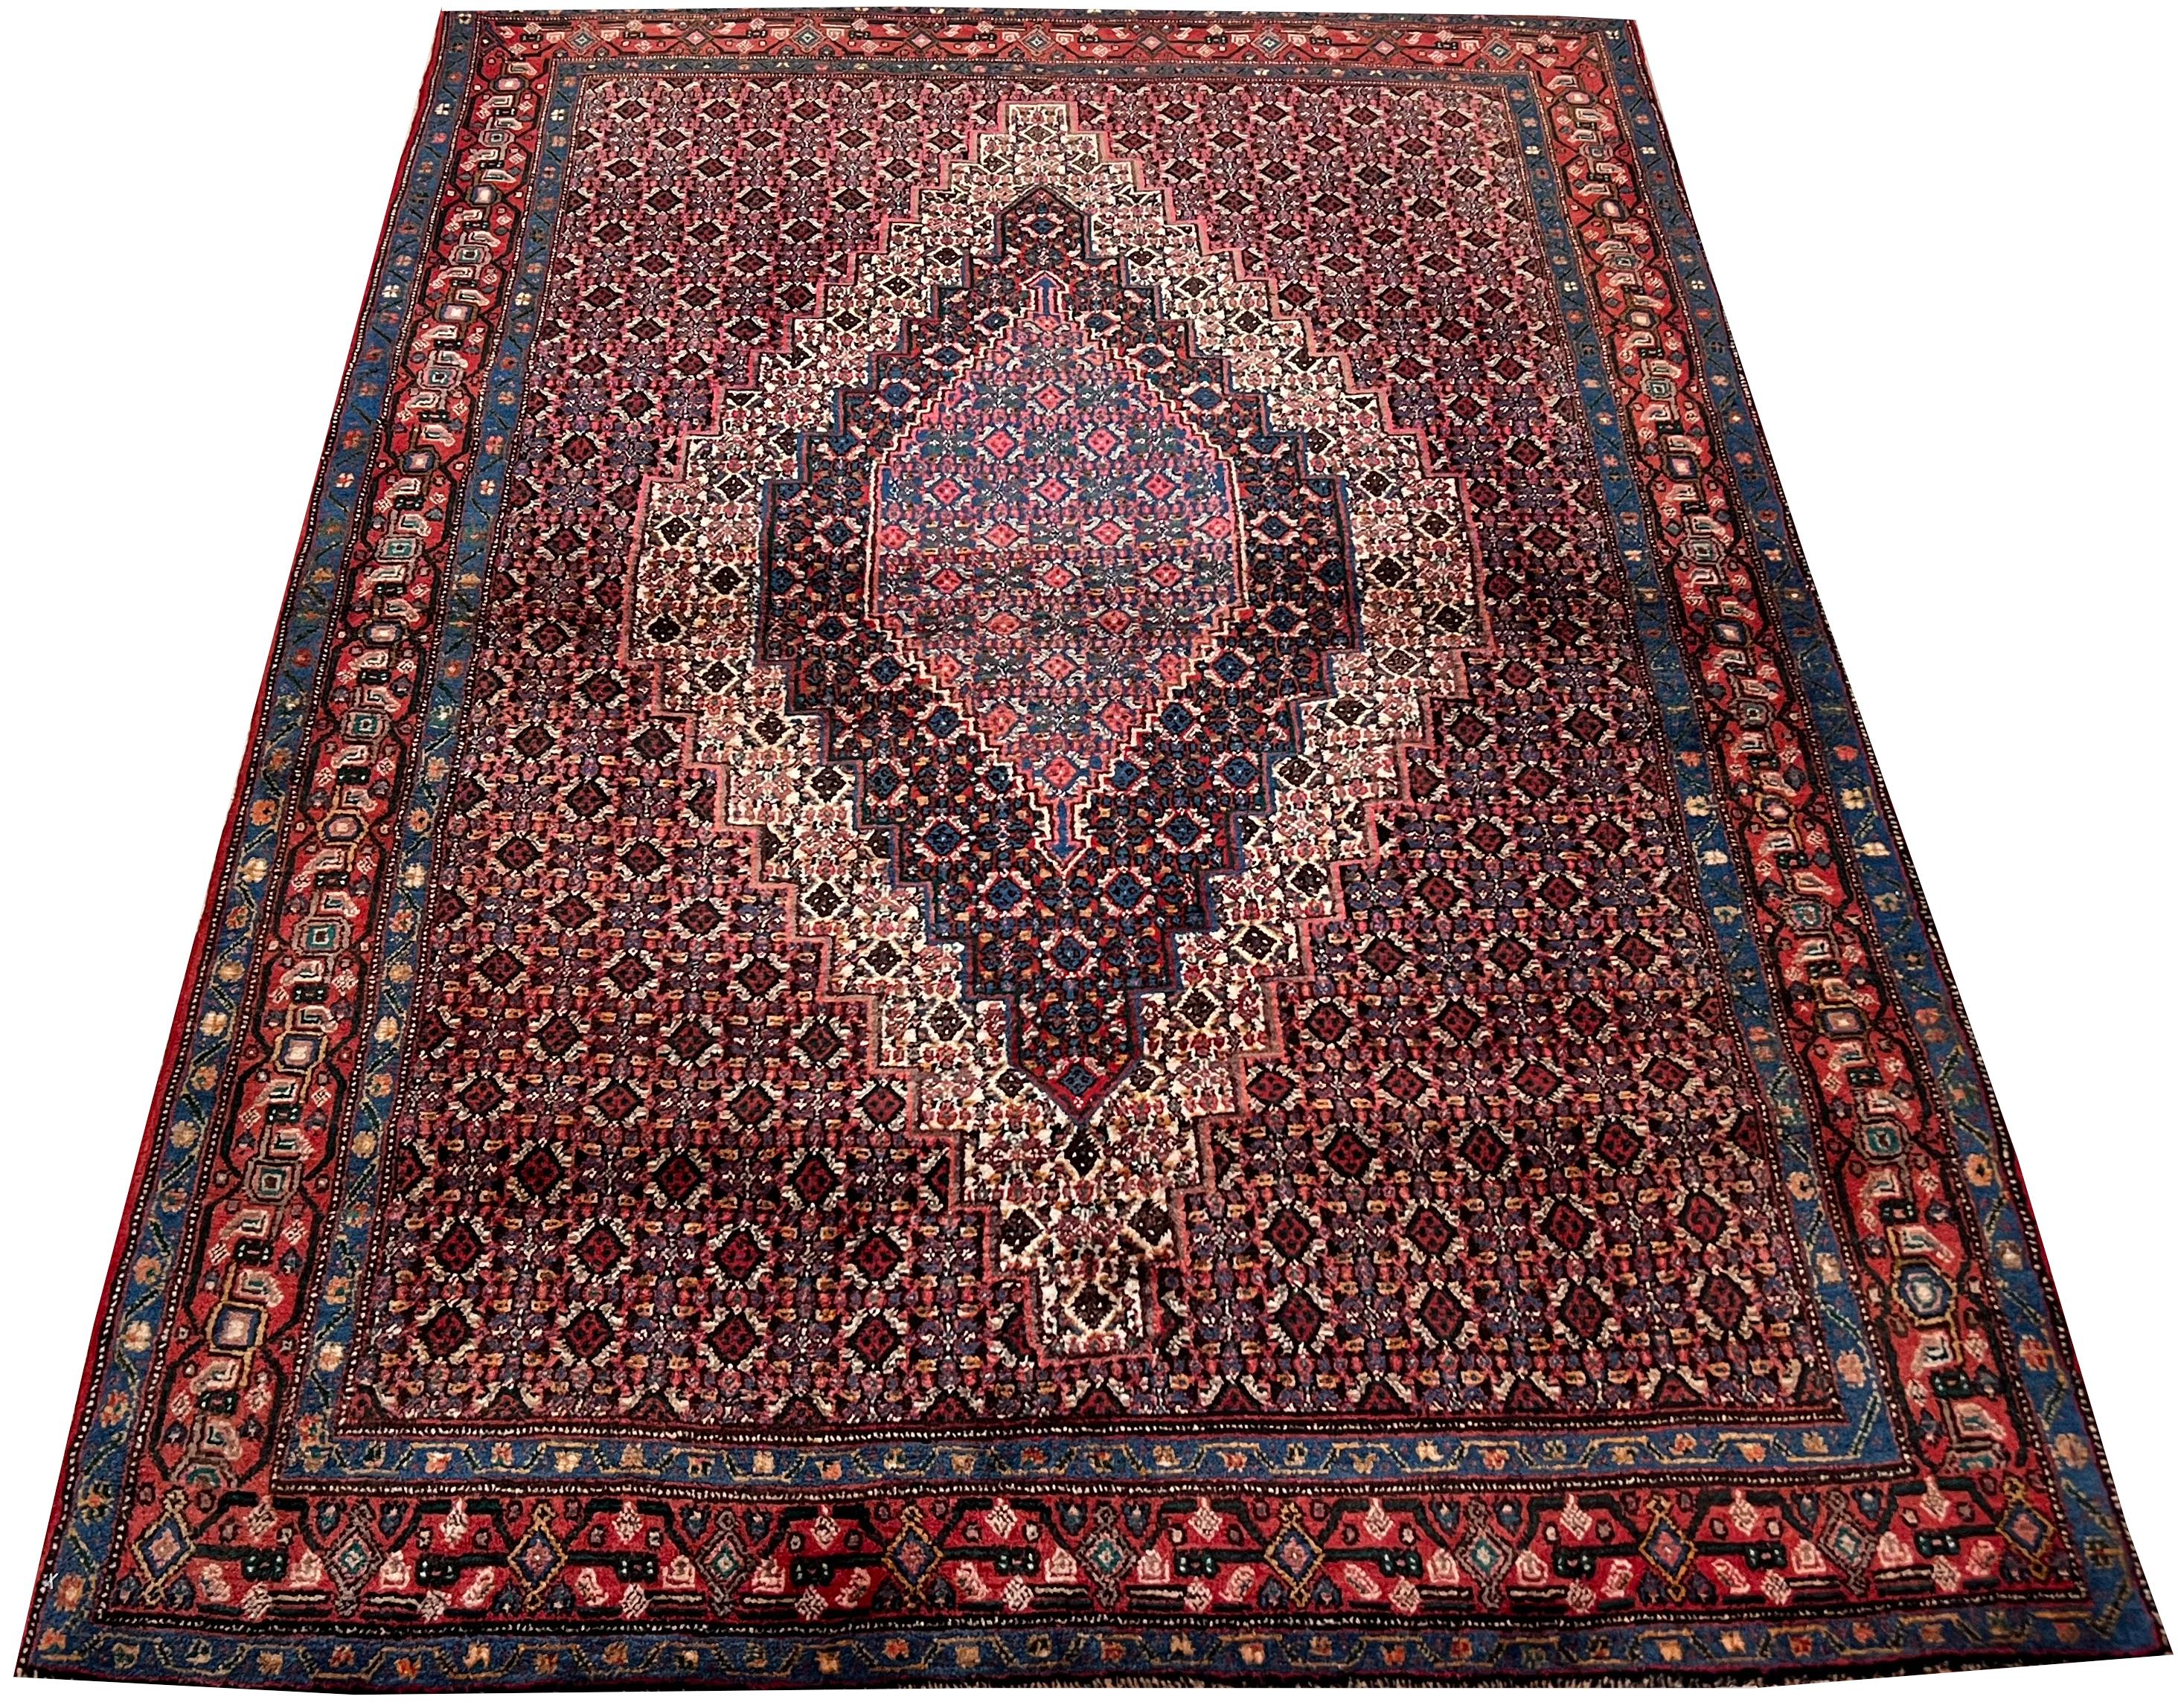 Antique Persian Tabriz Carpet, Wine Red, Ivory, Navy, Handmade Oriental Rug For Sale 3